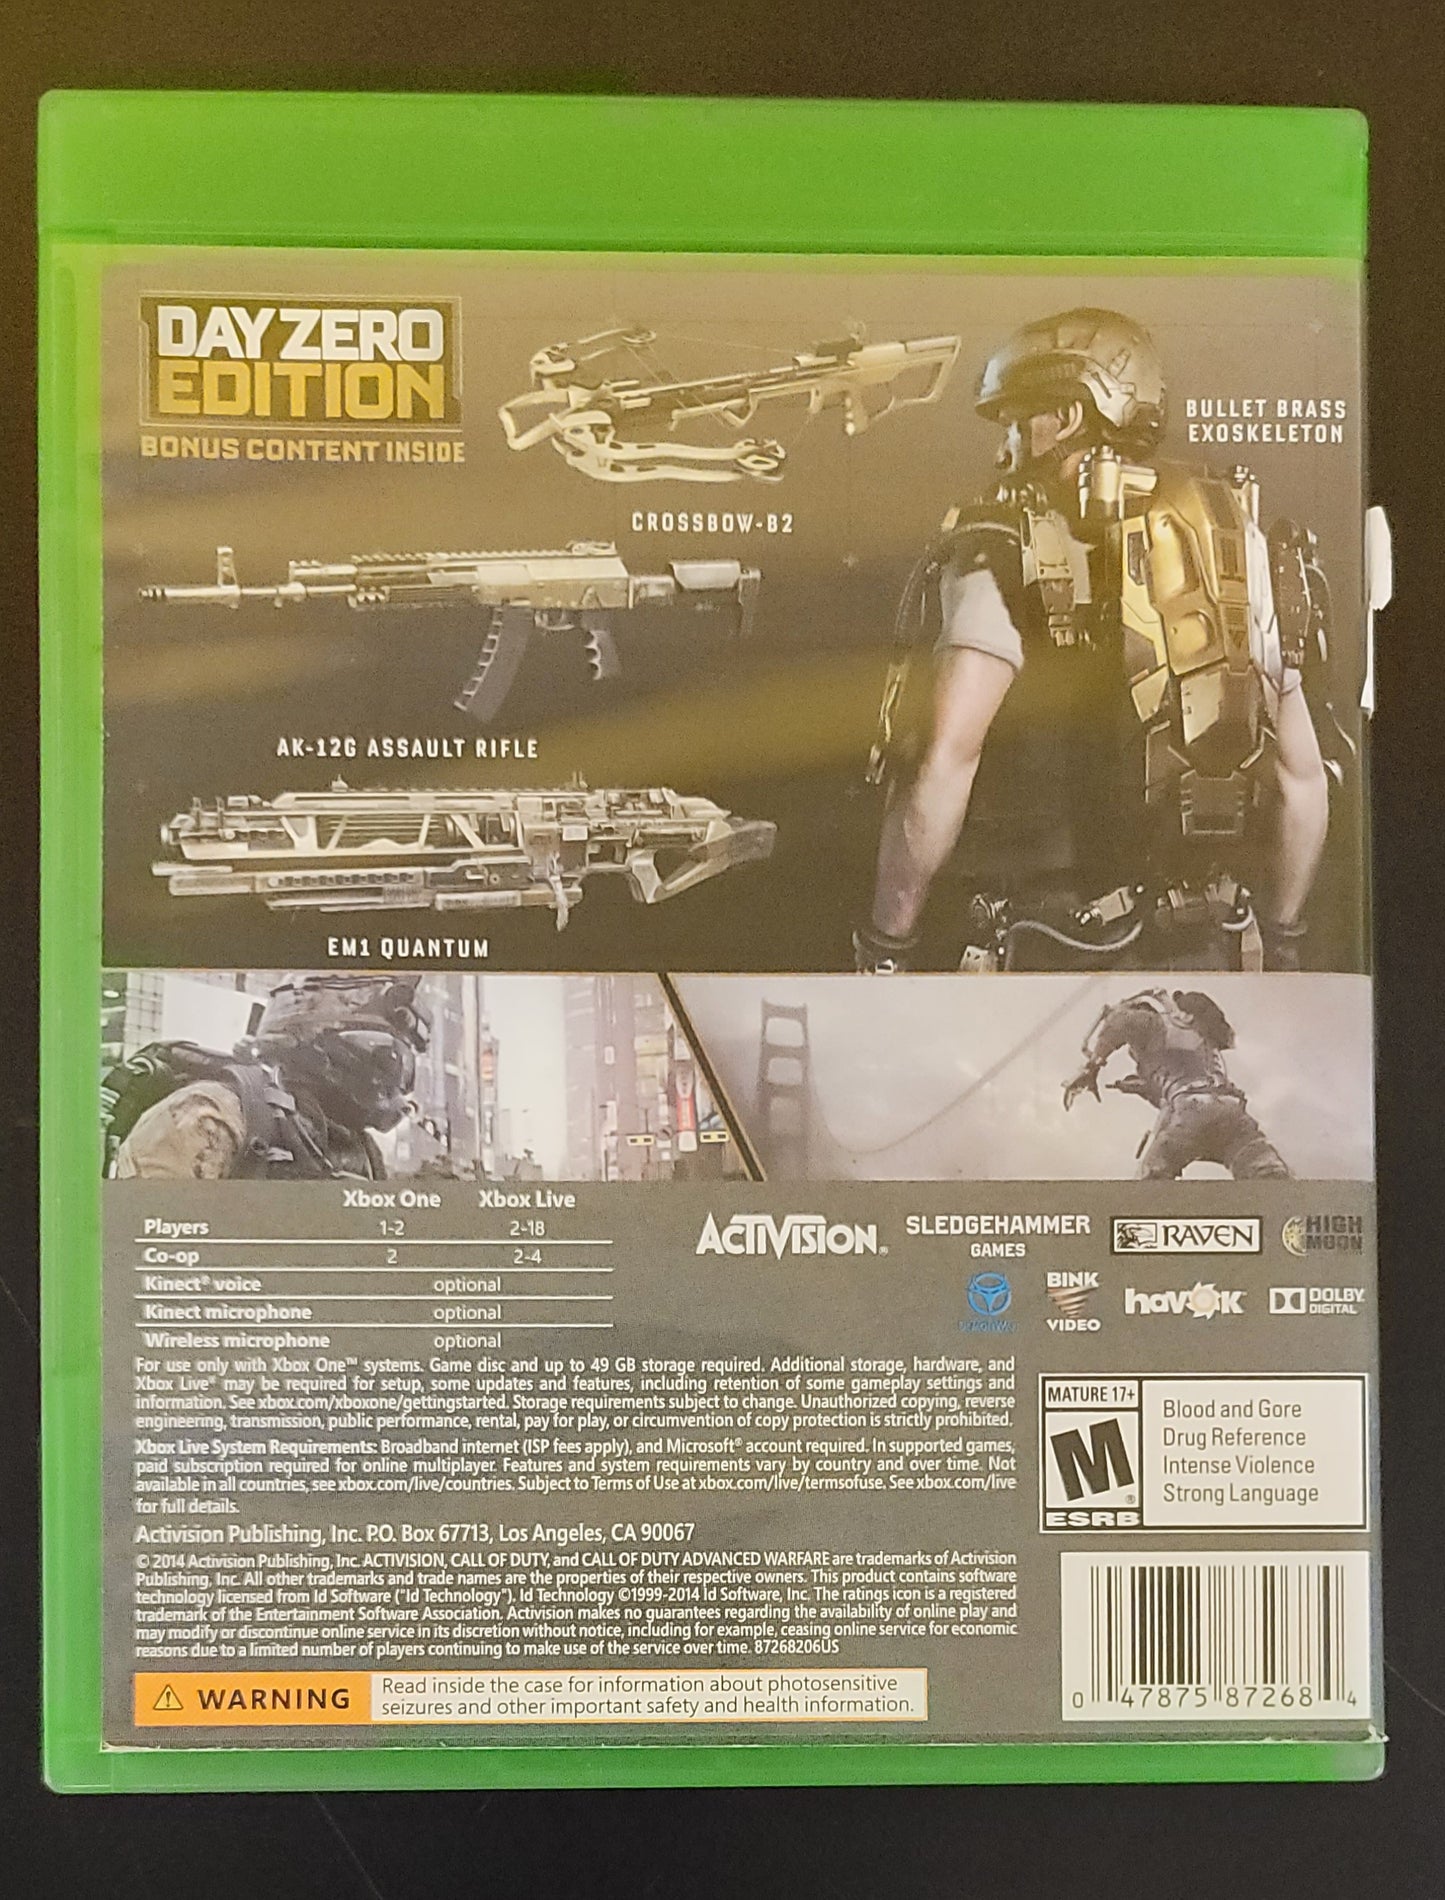 Call of Duty Advanced Warfare Day Zero Edition - Xb1 - Used